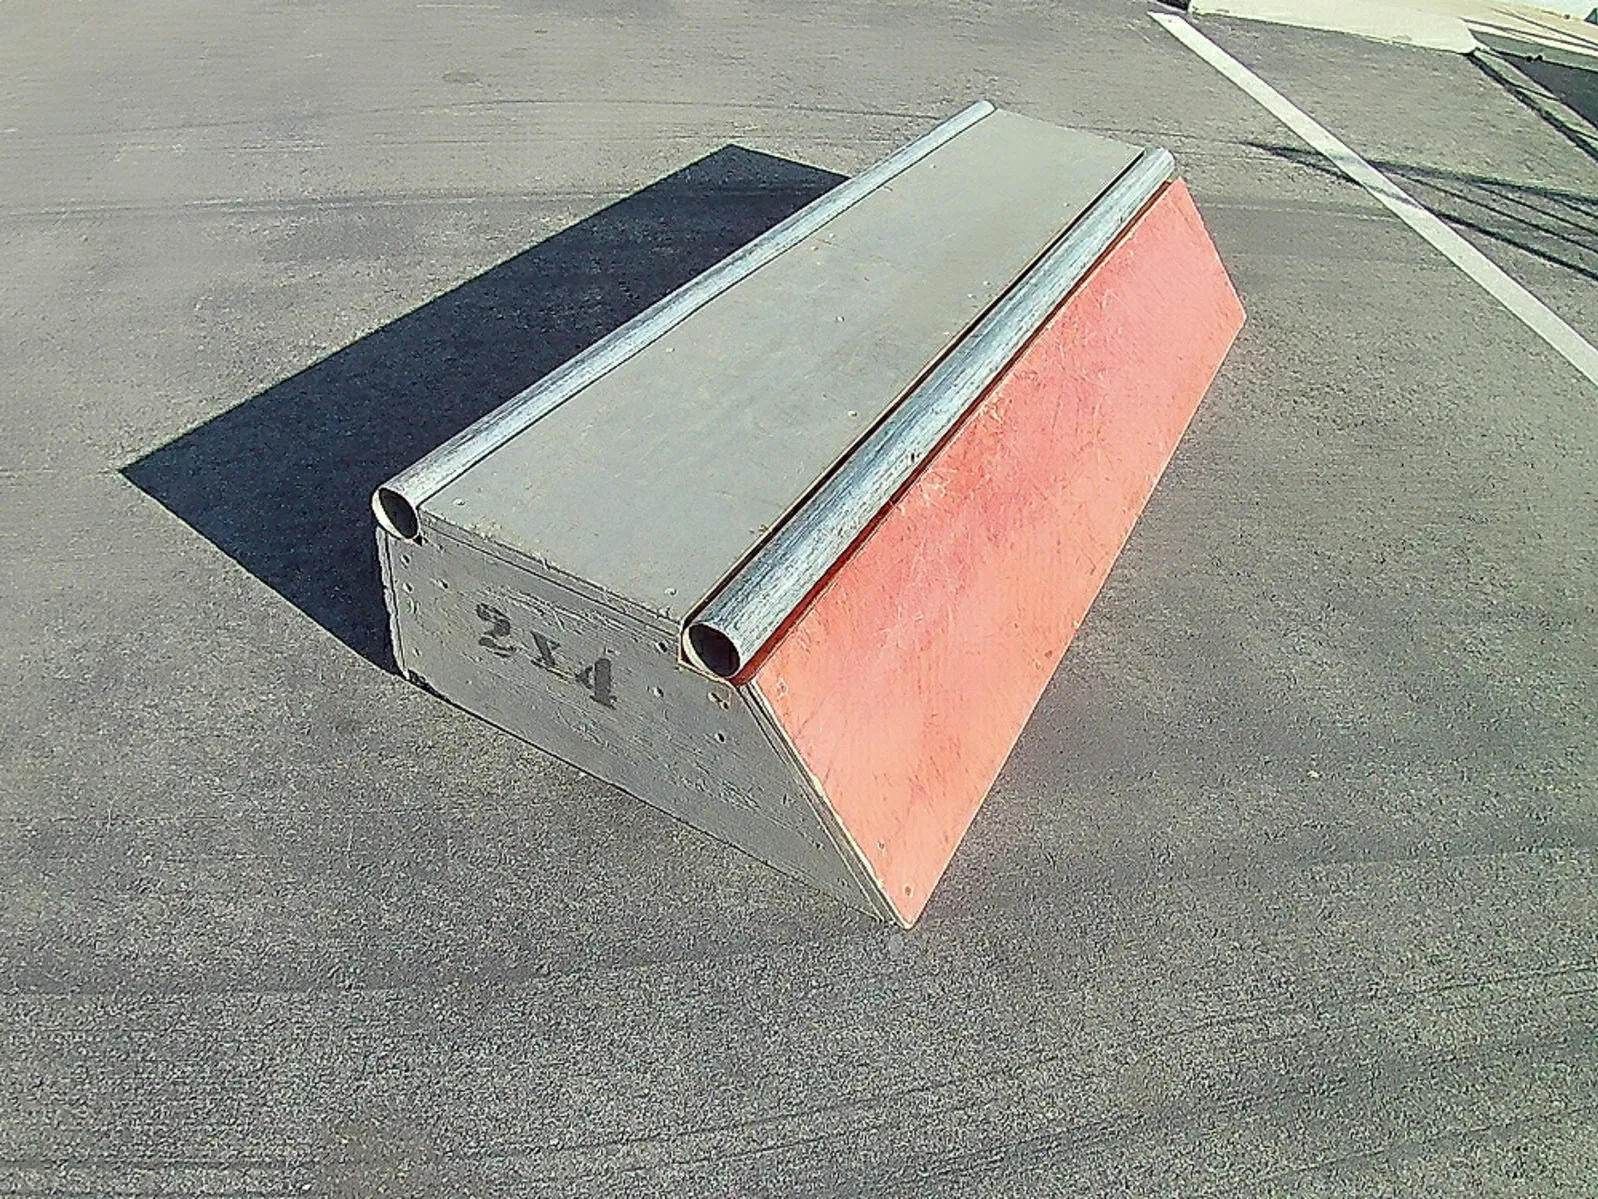 Slappy curb grind box on asphalt